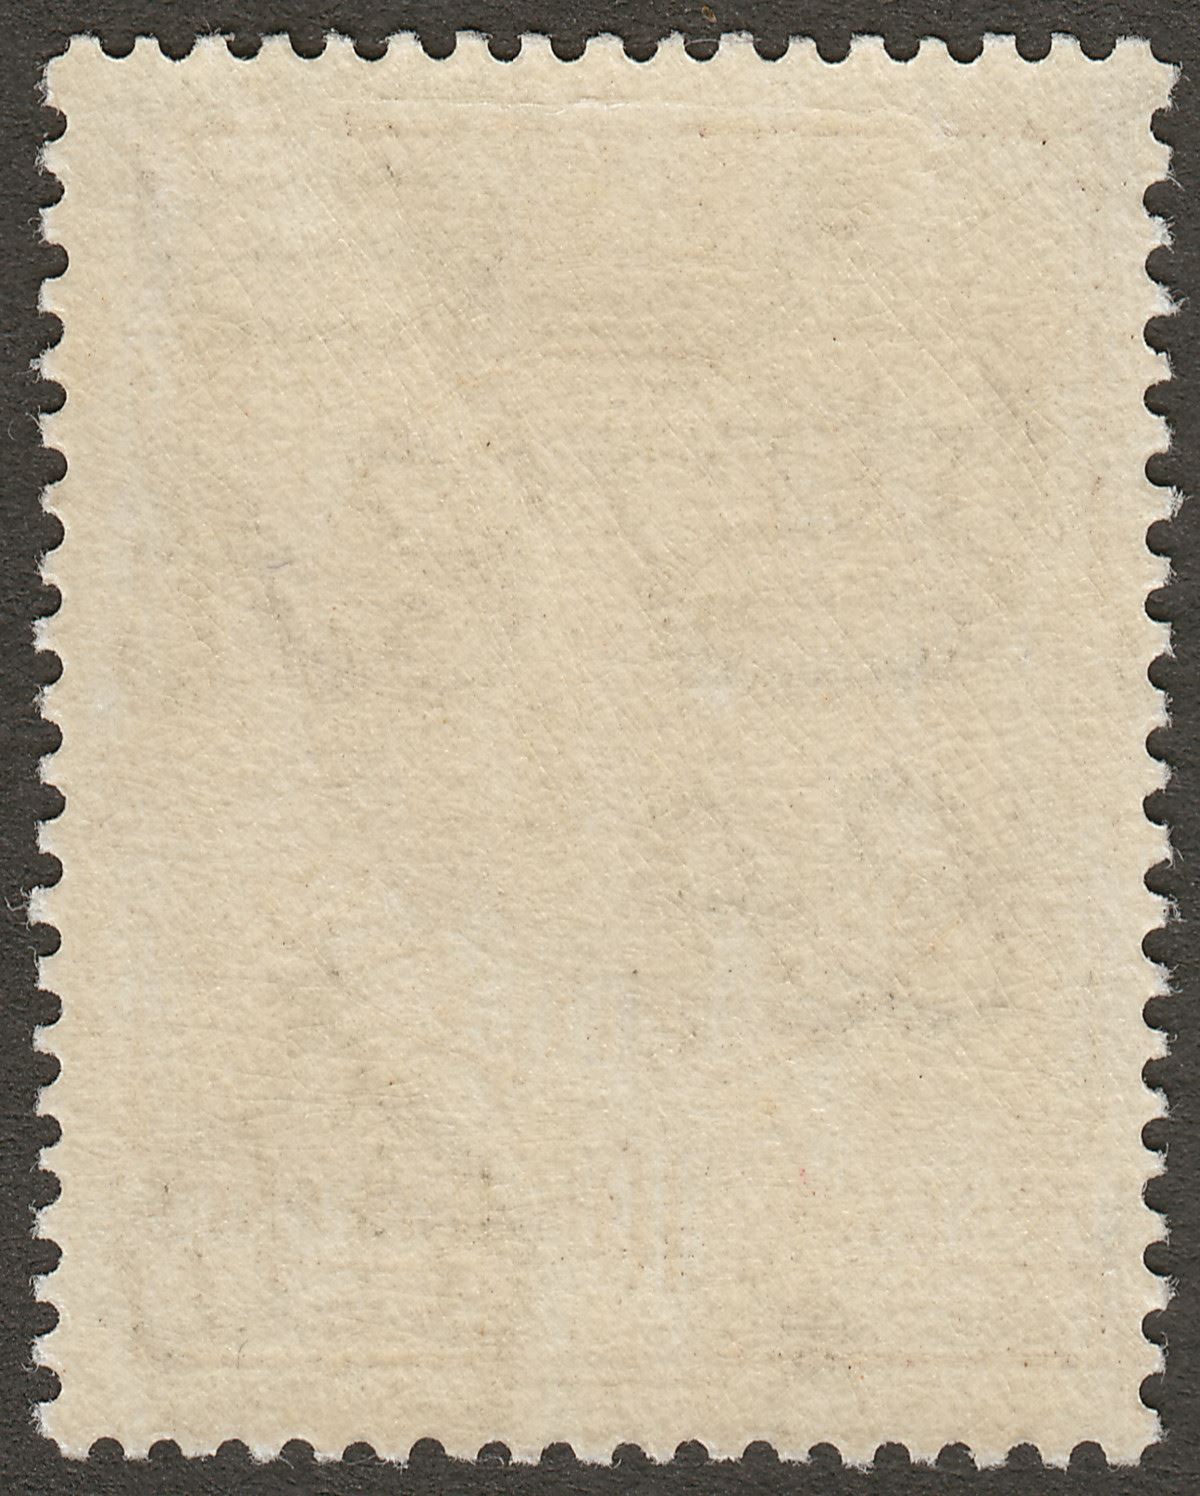 Swaziland 1938 KGVI 10sh Sepia perf 13½x13 Mint SG38